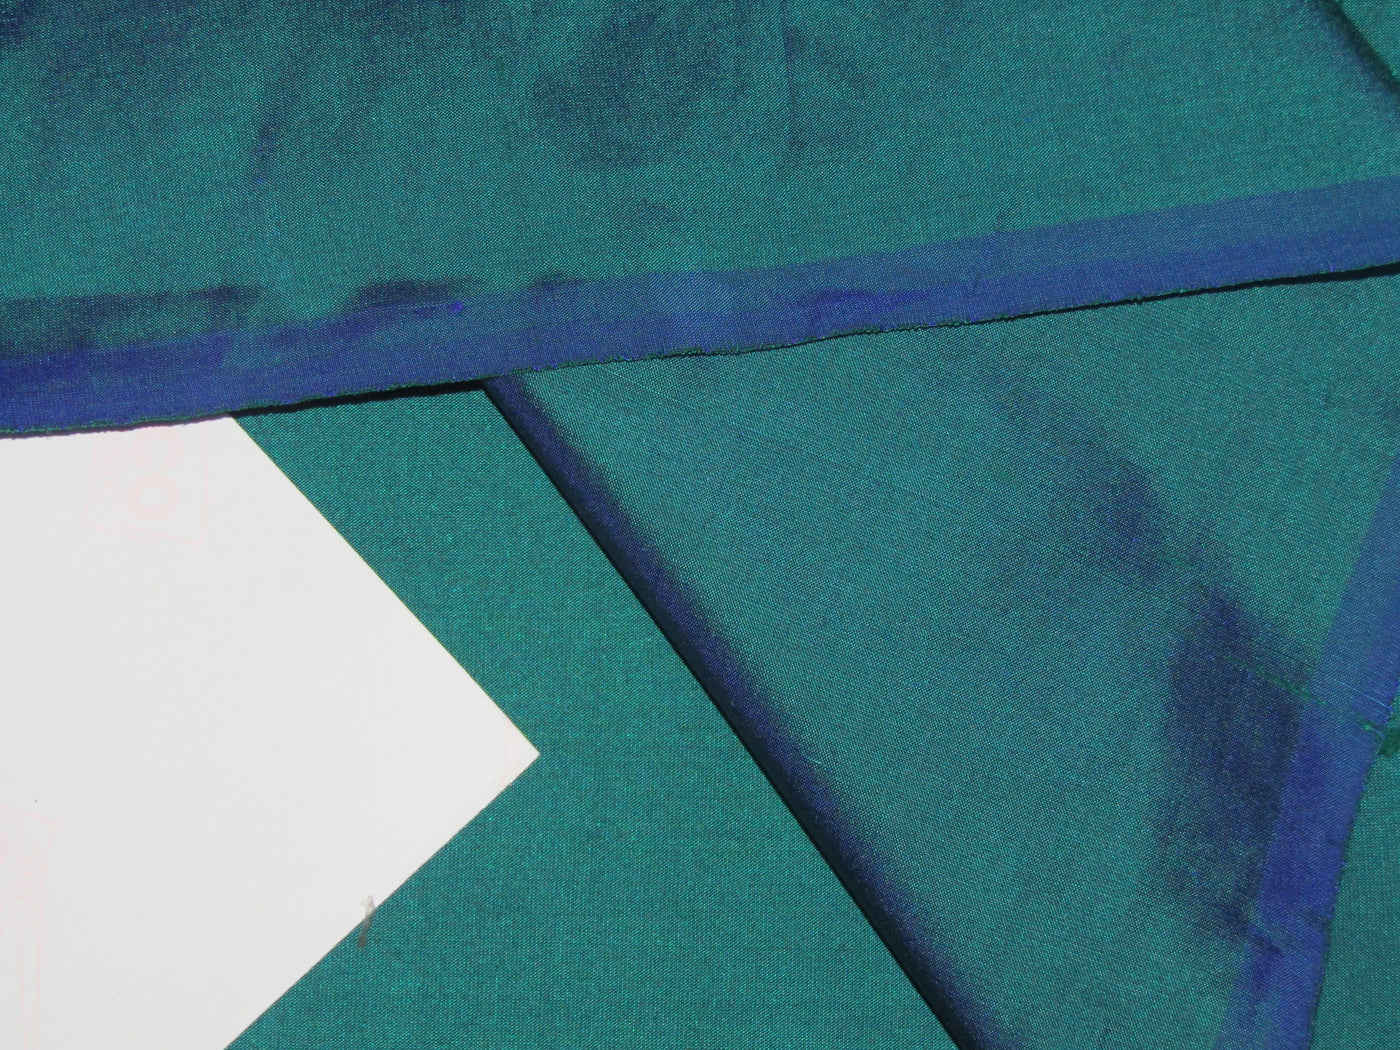 100% Pure SILK Dupioni FABRIC Kingfisher Green x Blue shot colour 54" wide DUP52[2]